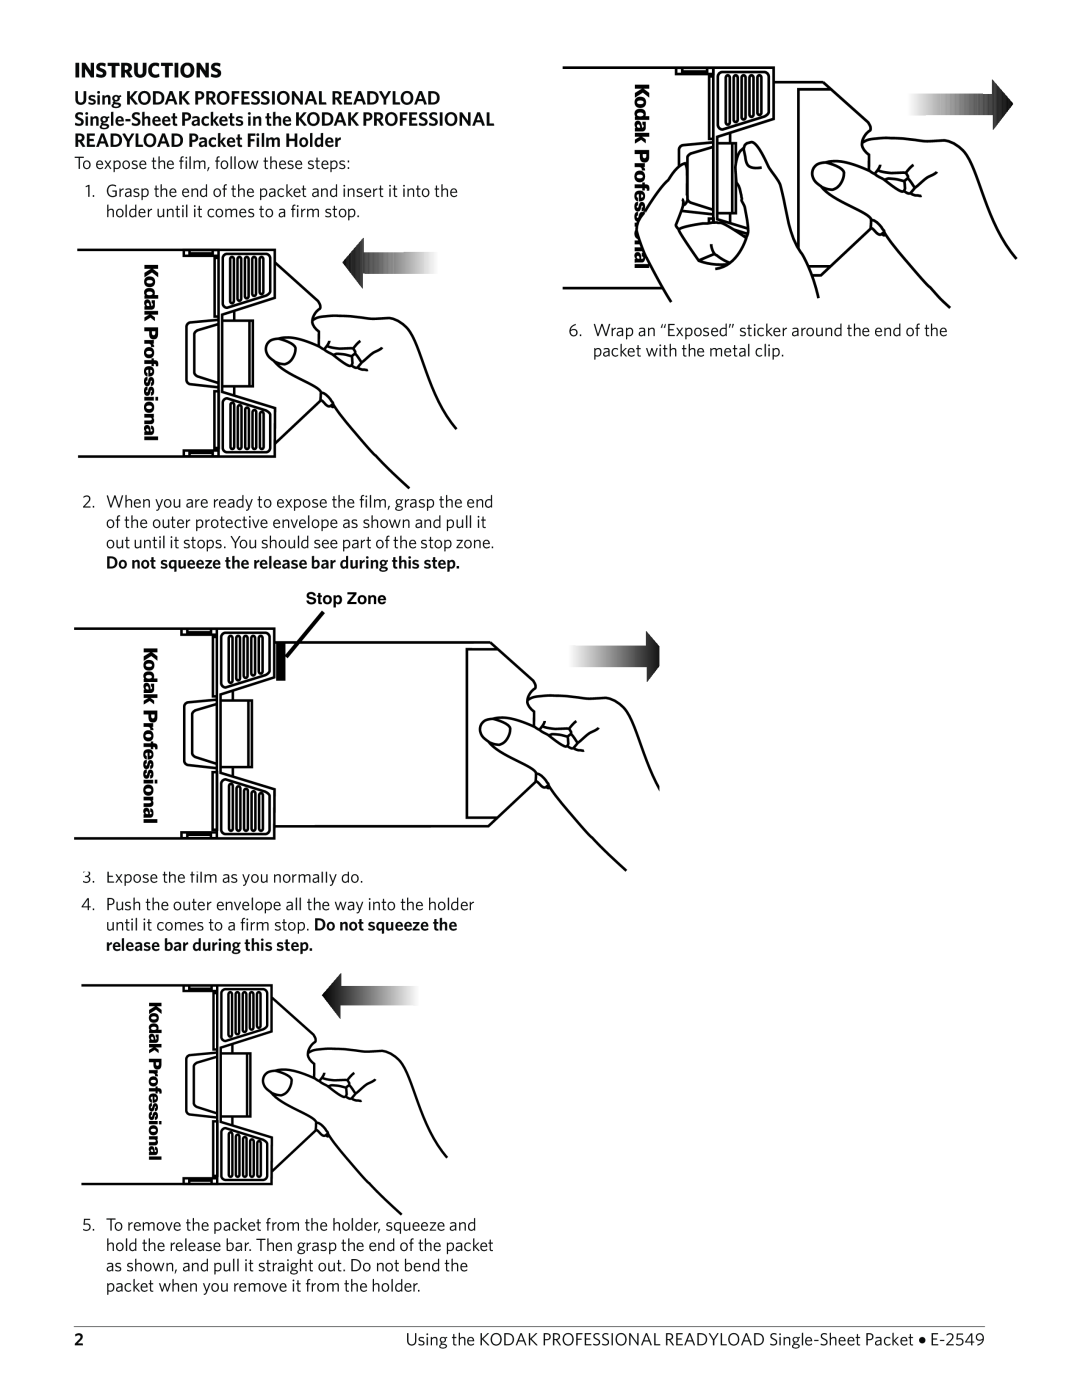 Kodak E-2549 manual Instructions, Using KODAK PROFESSIONAL READYLOAD, Single-Sheet Packets in the KODAK PROFESSIONAL 